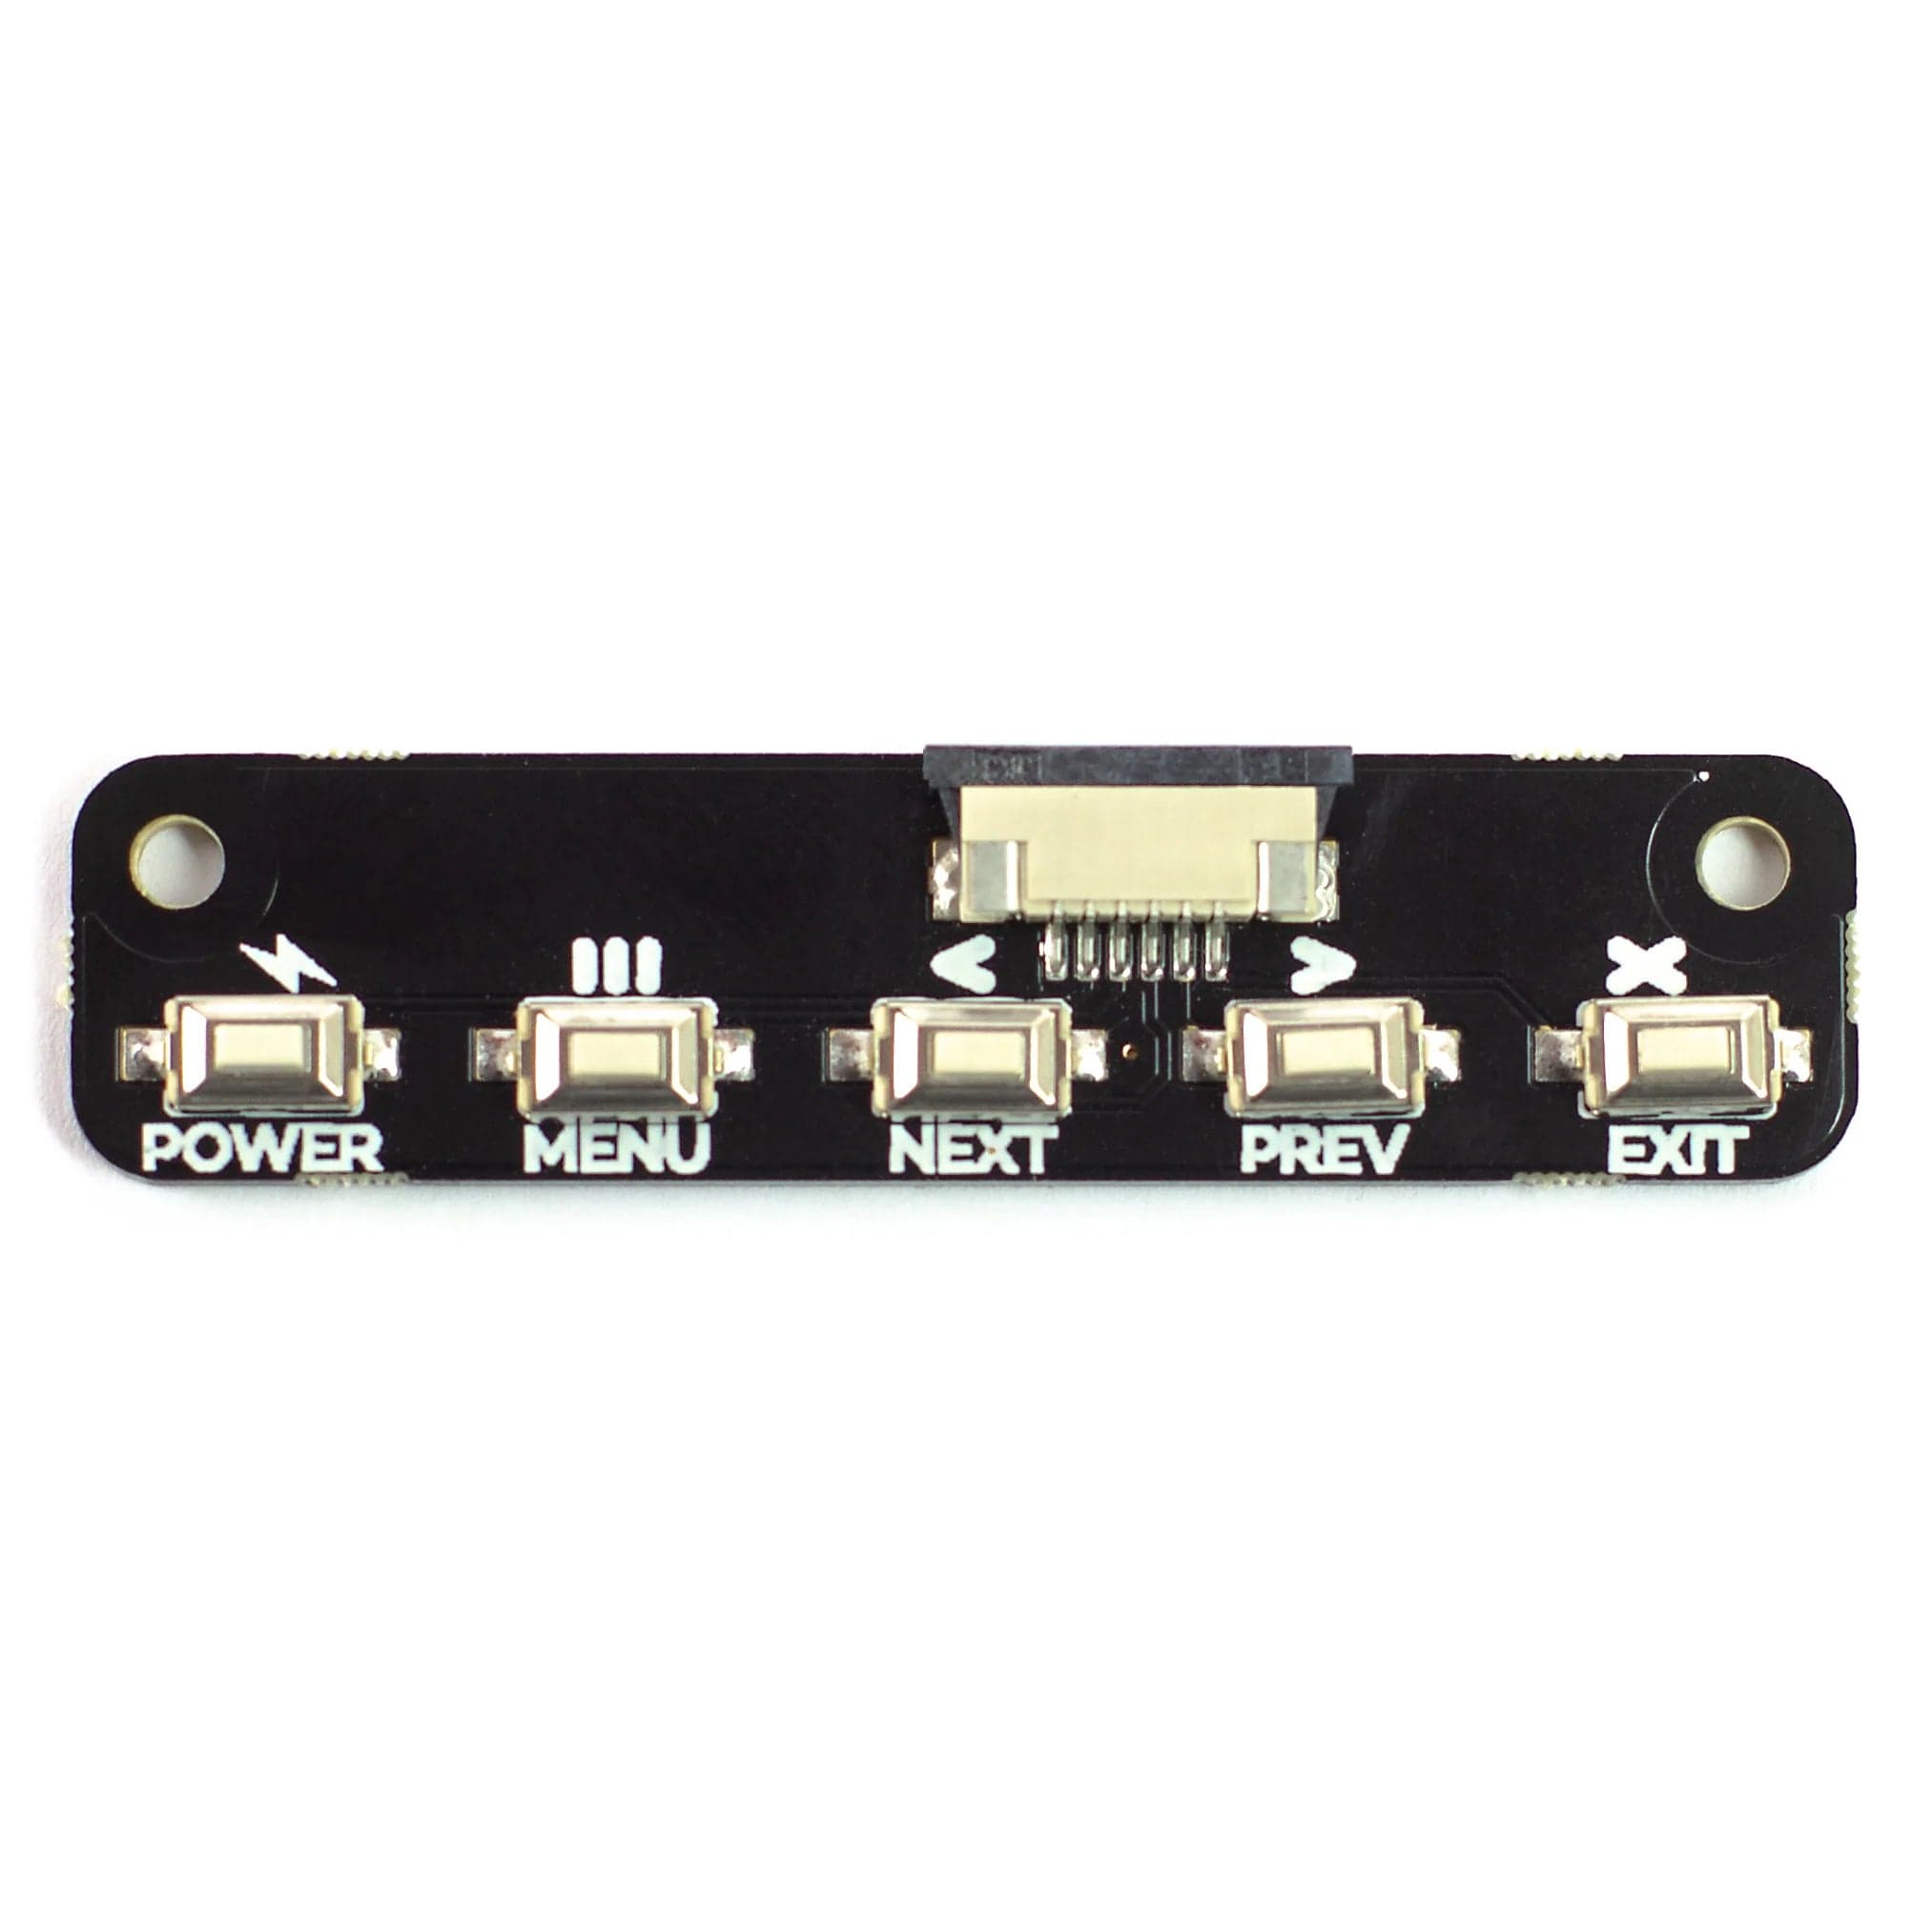 HDMI 8" IPS LCD Screen Kit (1024x768) - The Pi Hut